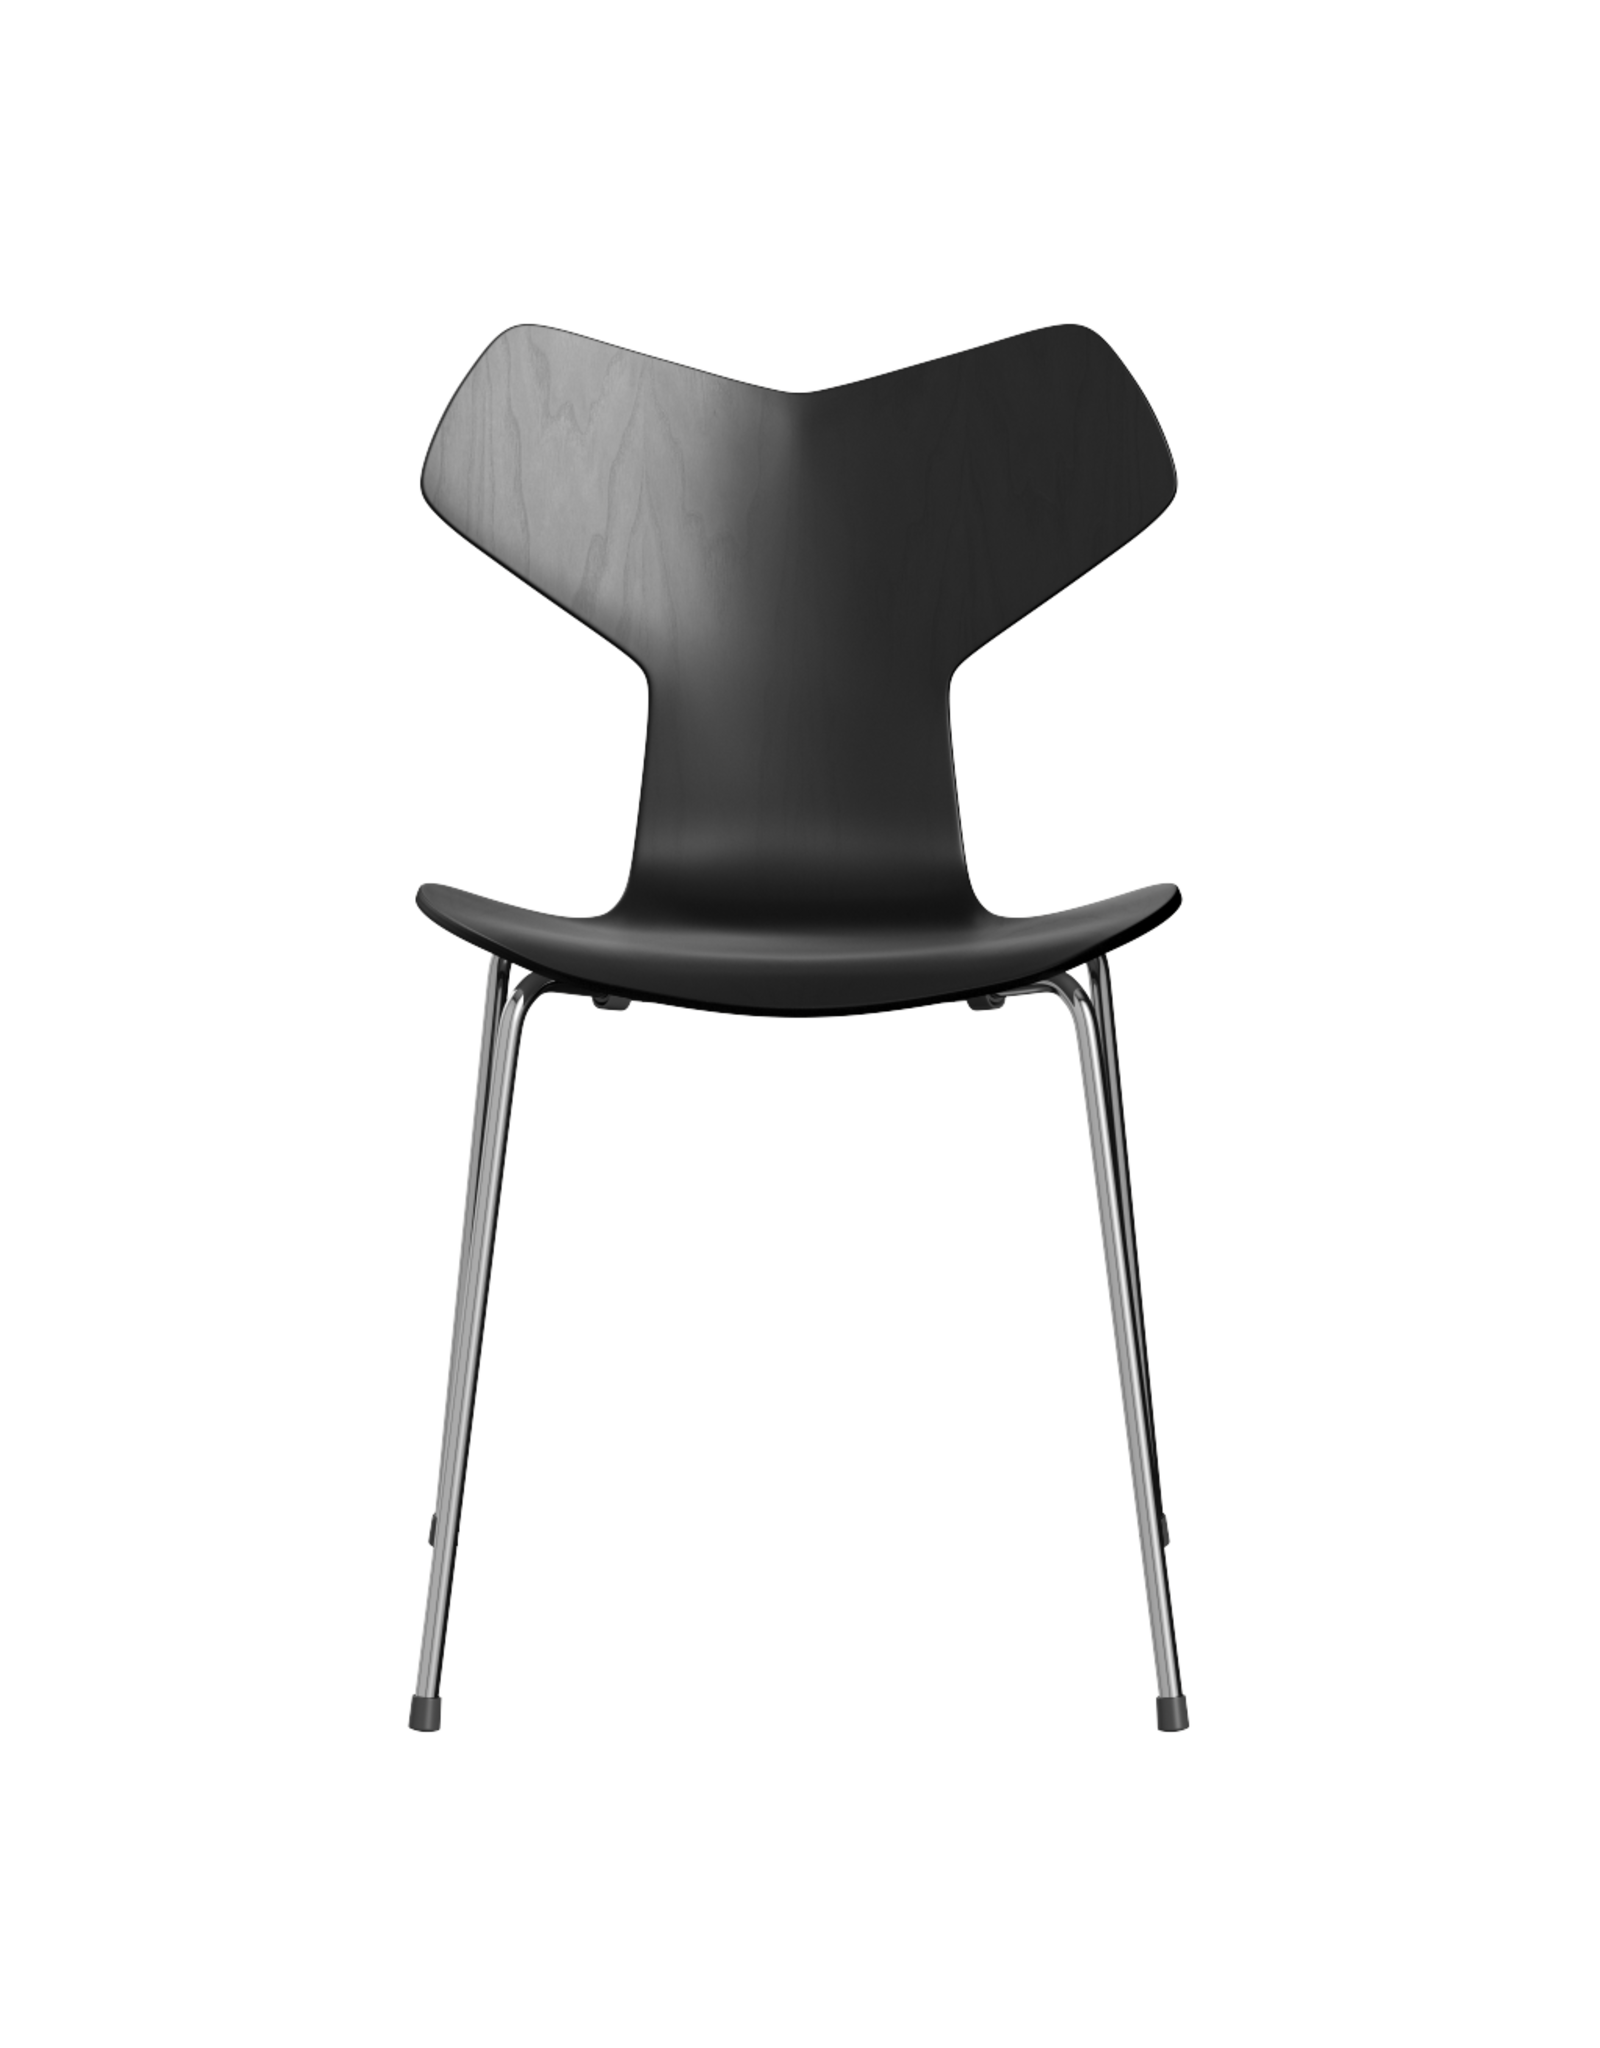 3130 GRAND PRIX 椅子, 黑色